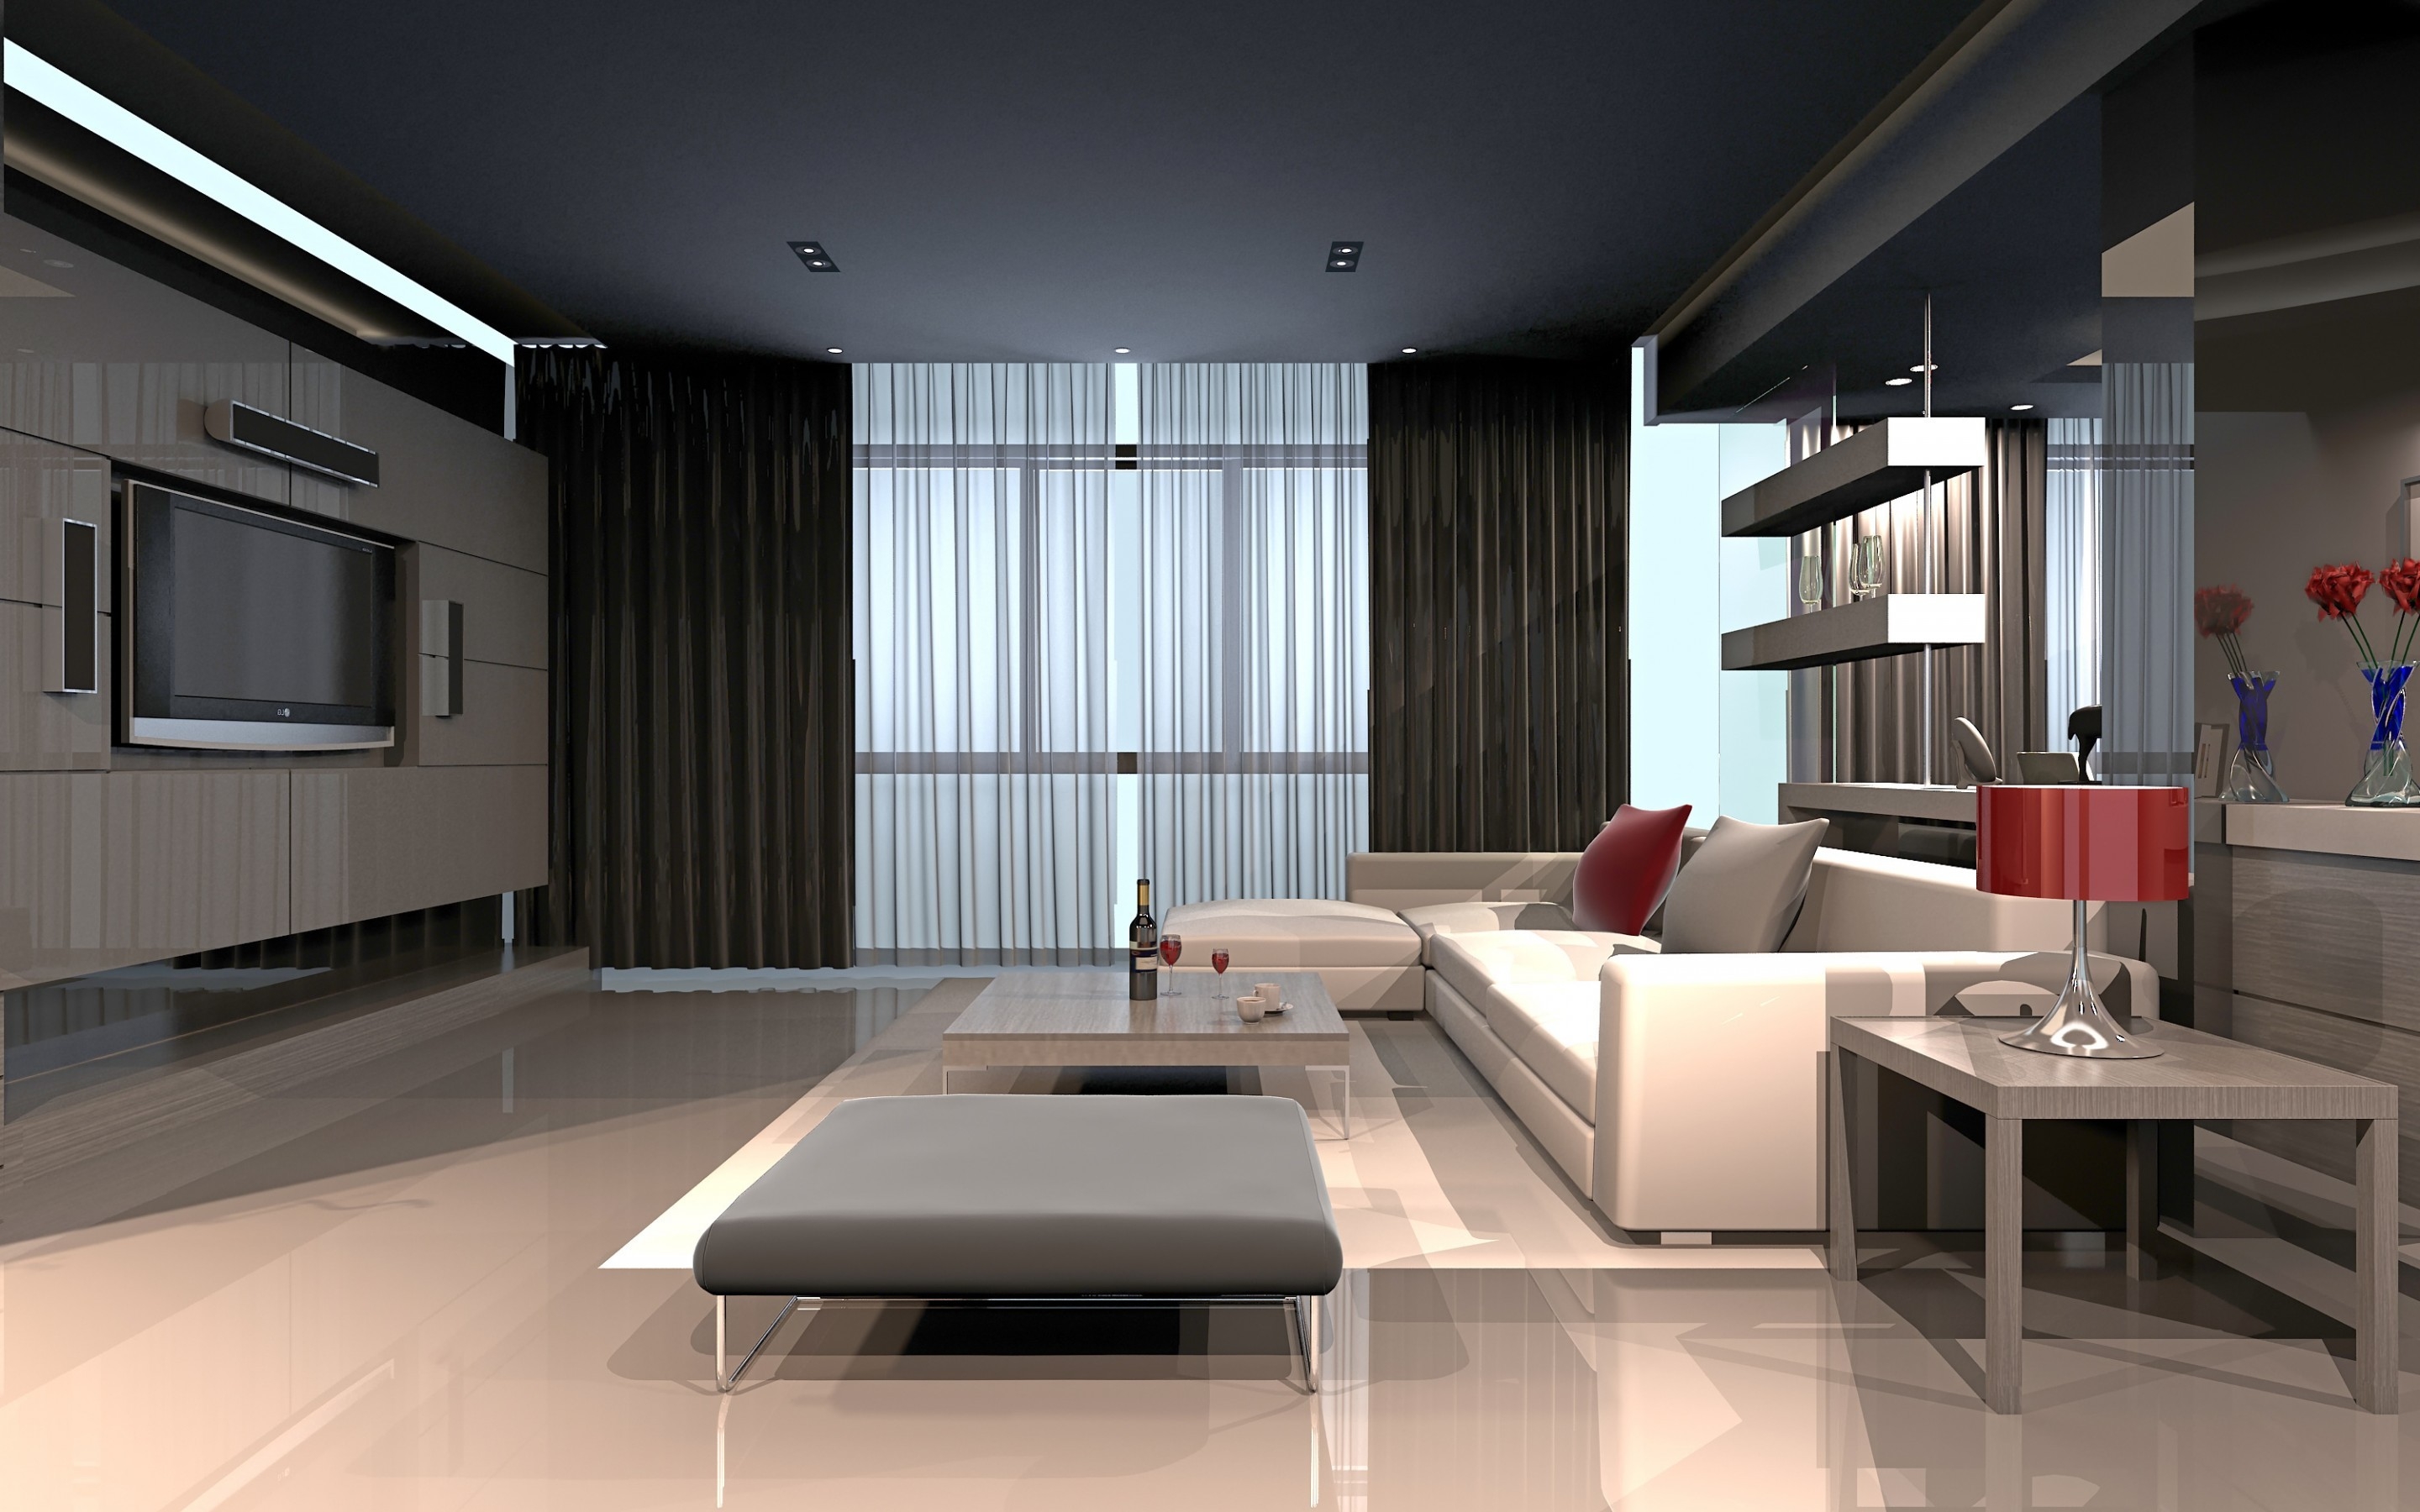 Spectacular Living Room Design for 2880 x 1800 Retina Display resolution